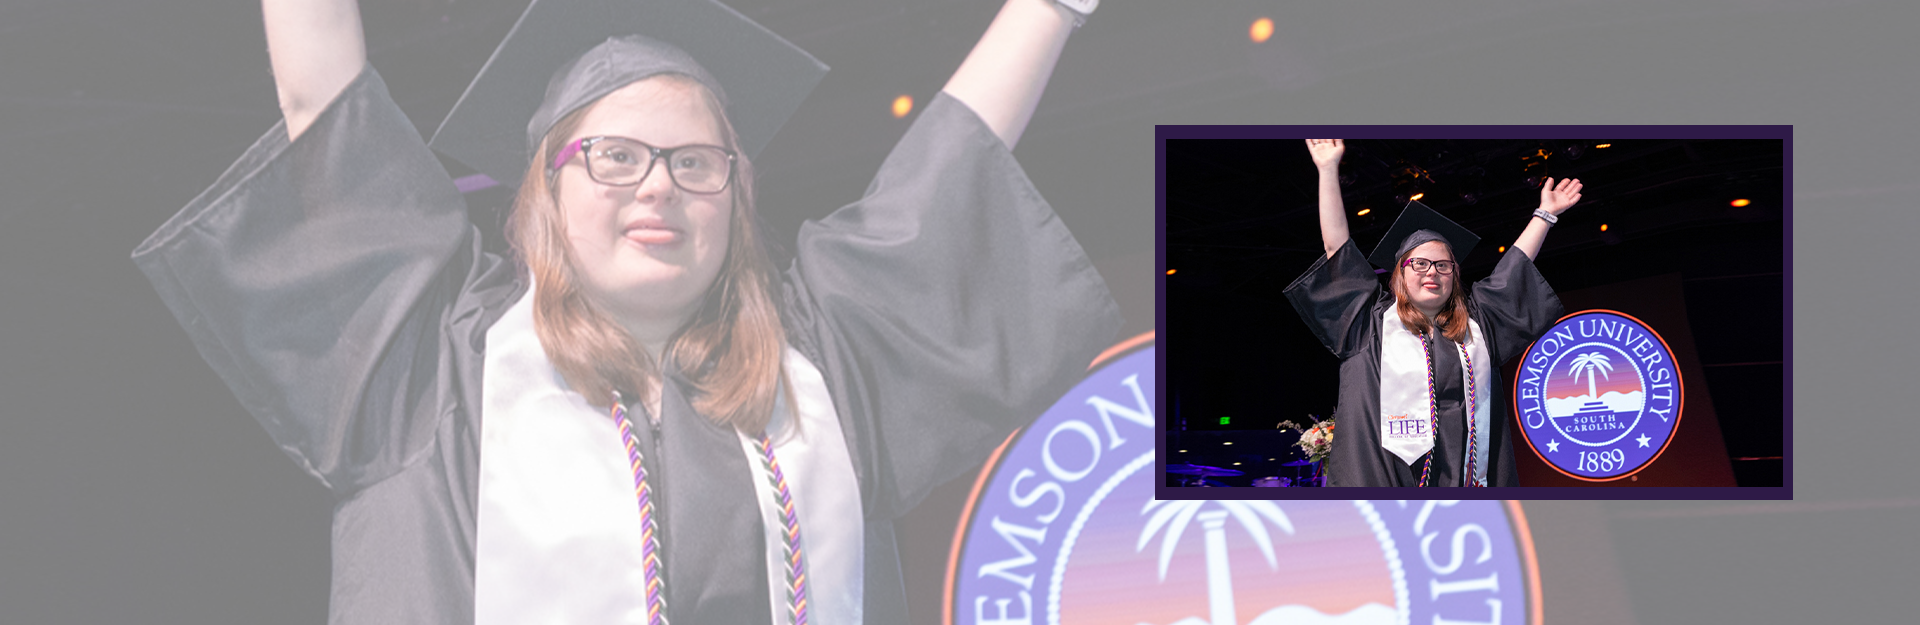 LIFE Graduate raises hands in celebration at graduation